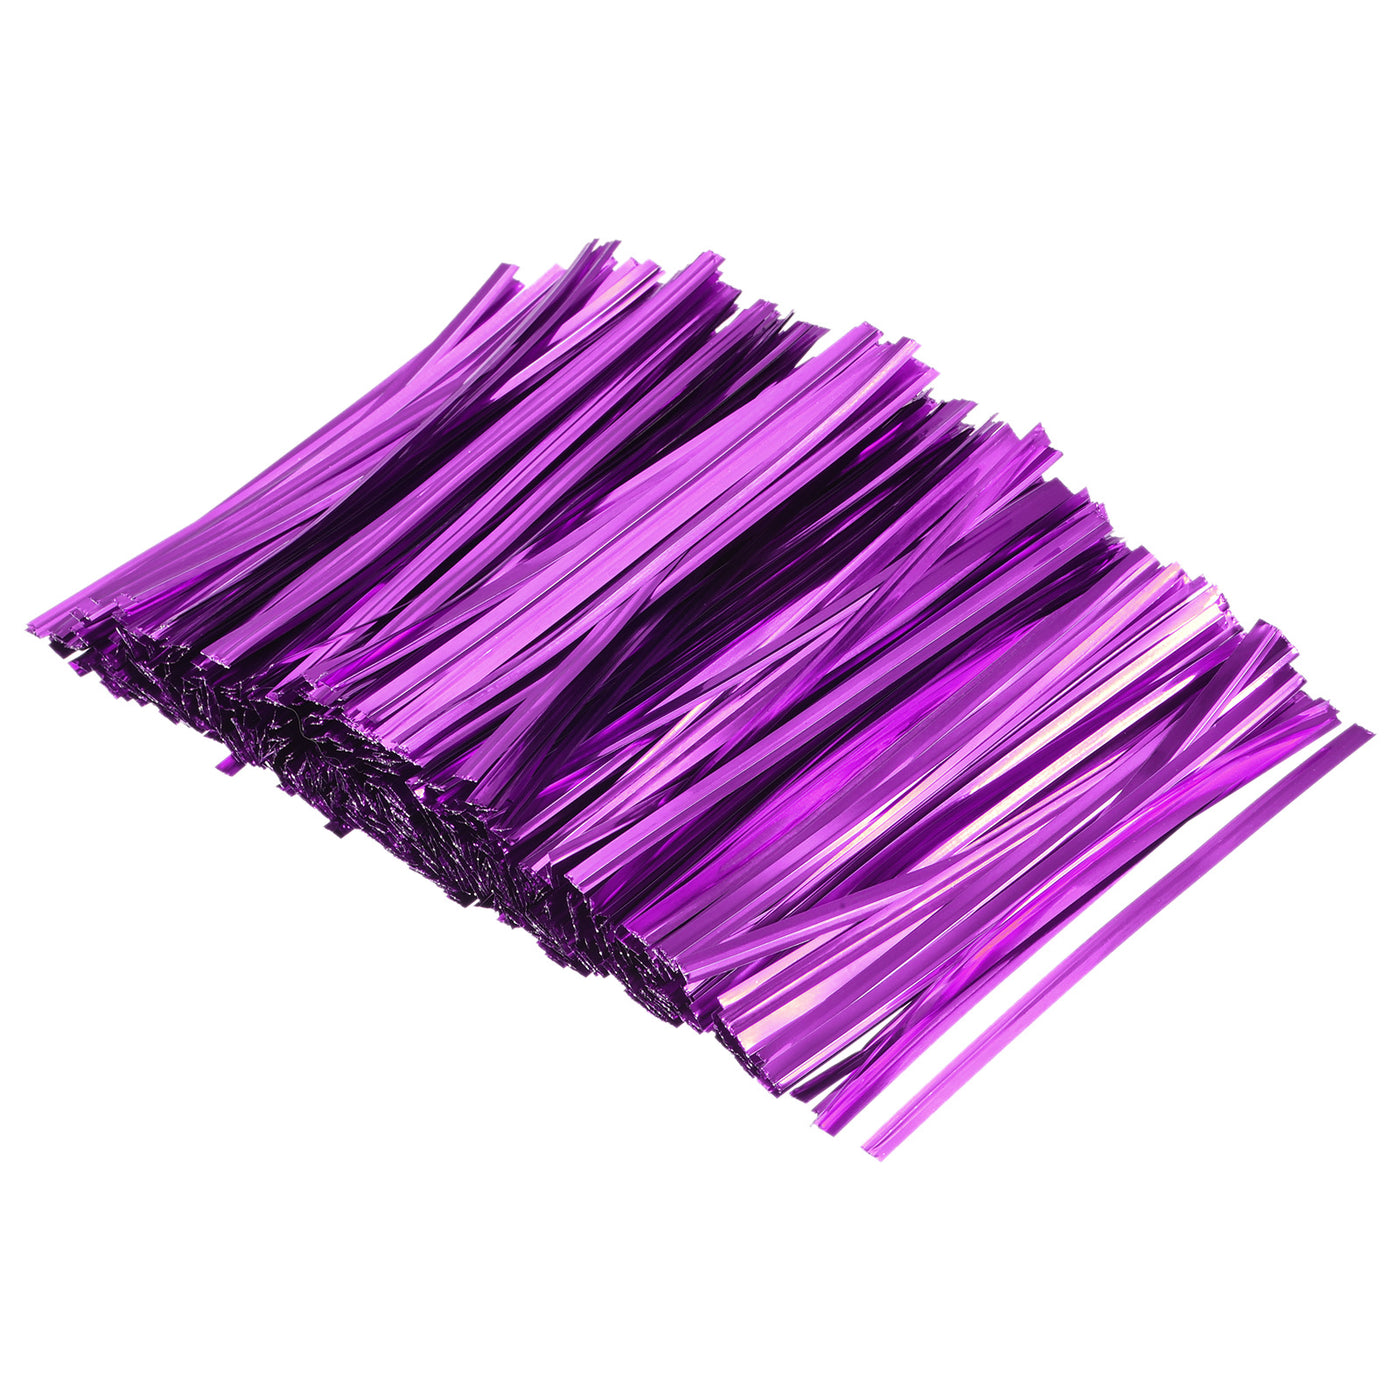 Harfington Foil Twist Ties 4" Plastic Closure Tie for Bread, Candy Purple 750pcs